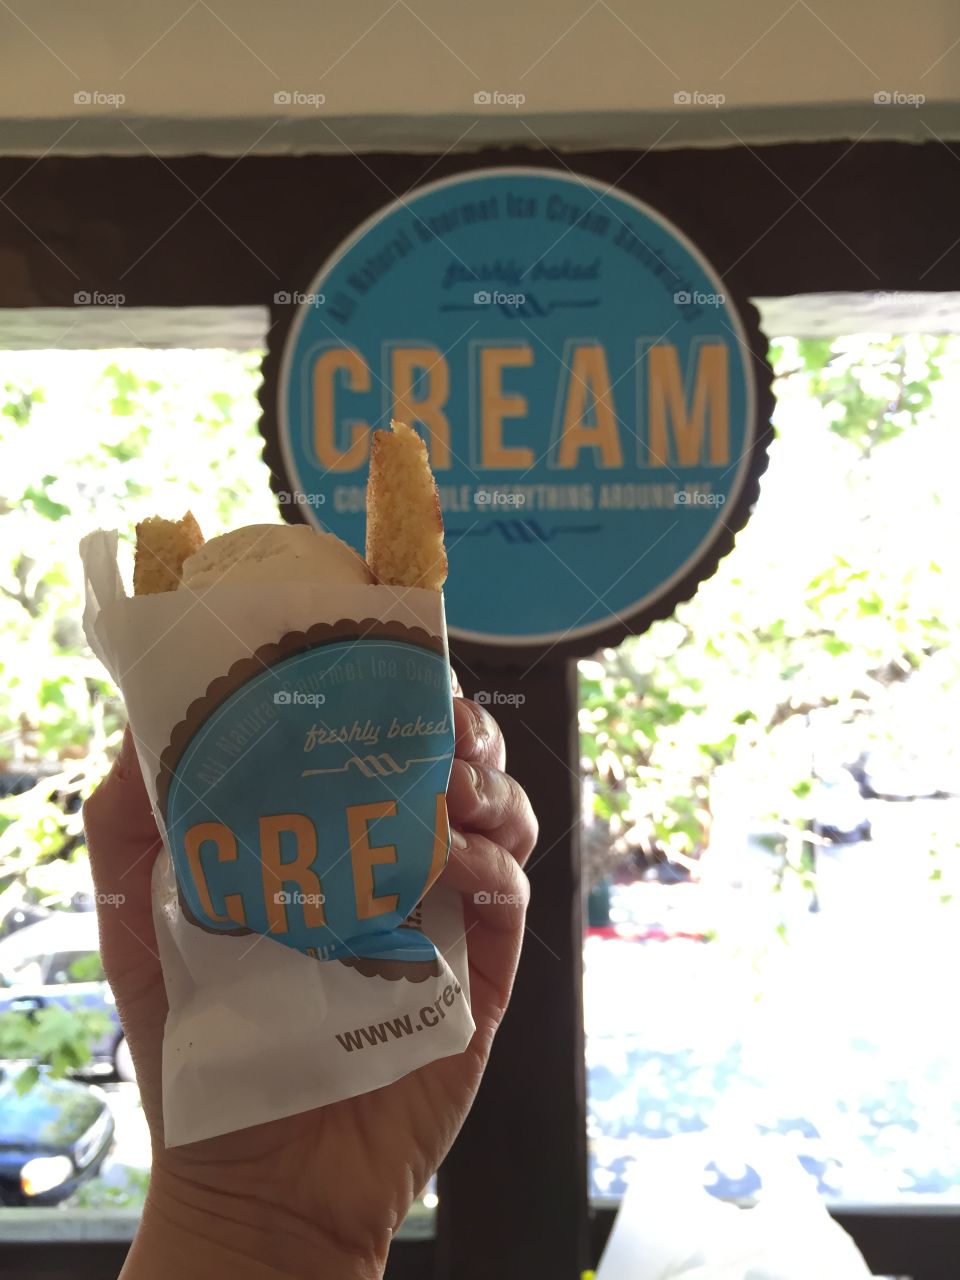 CREAM. Nothing says summer like an ice cream sandwich